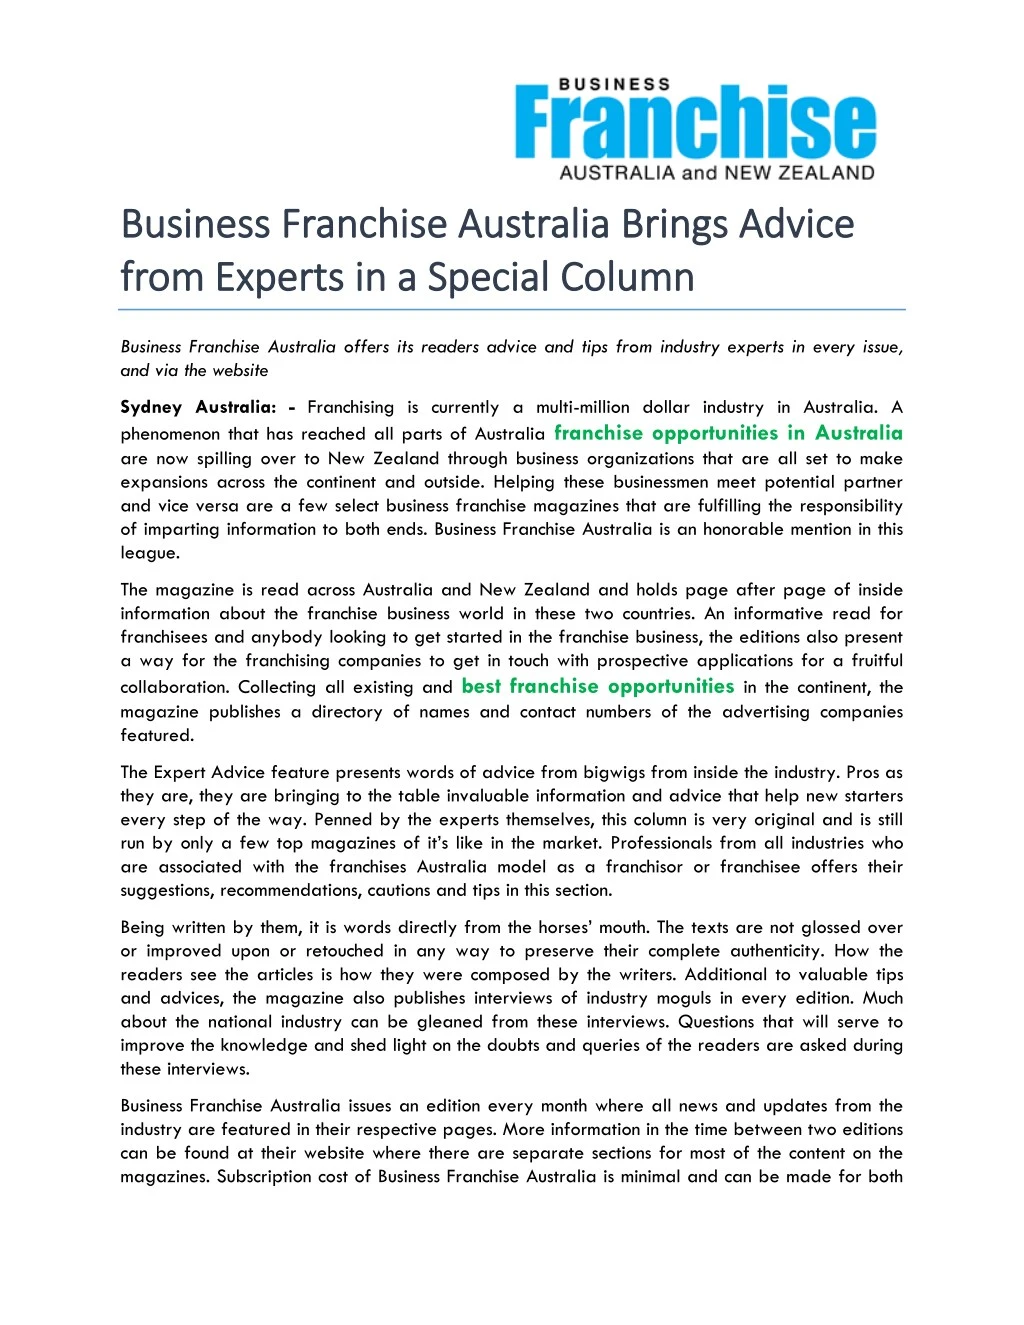 business franchise australia brings advice